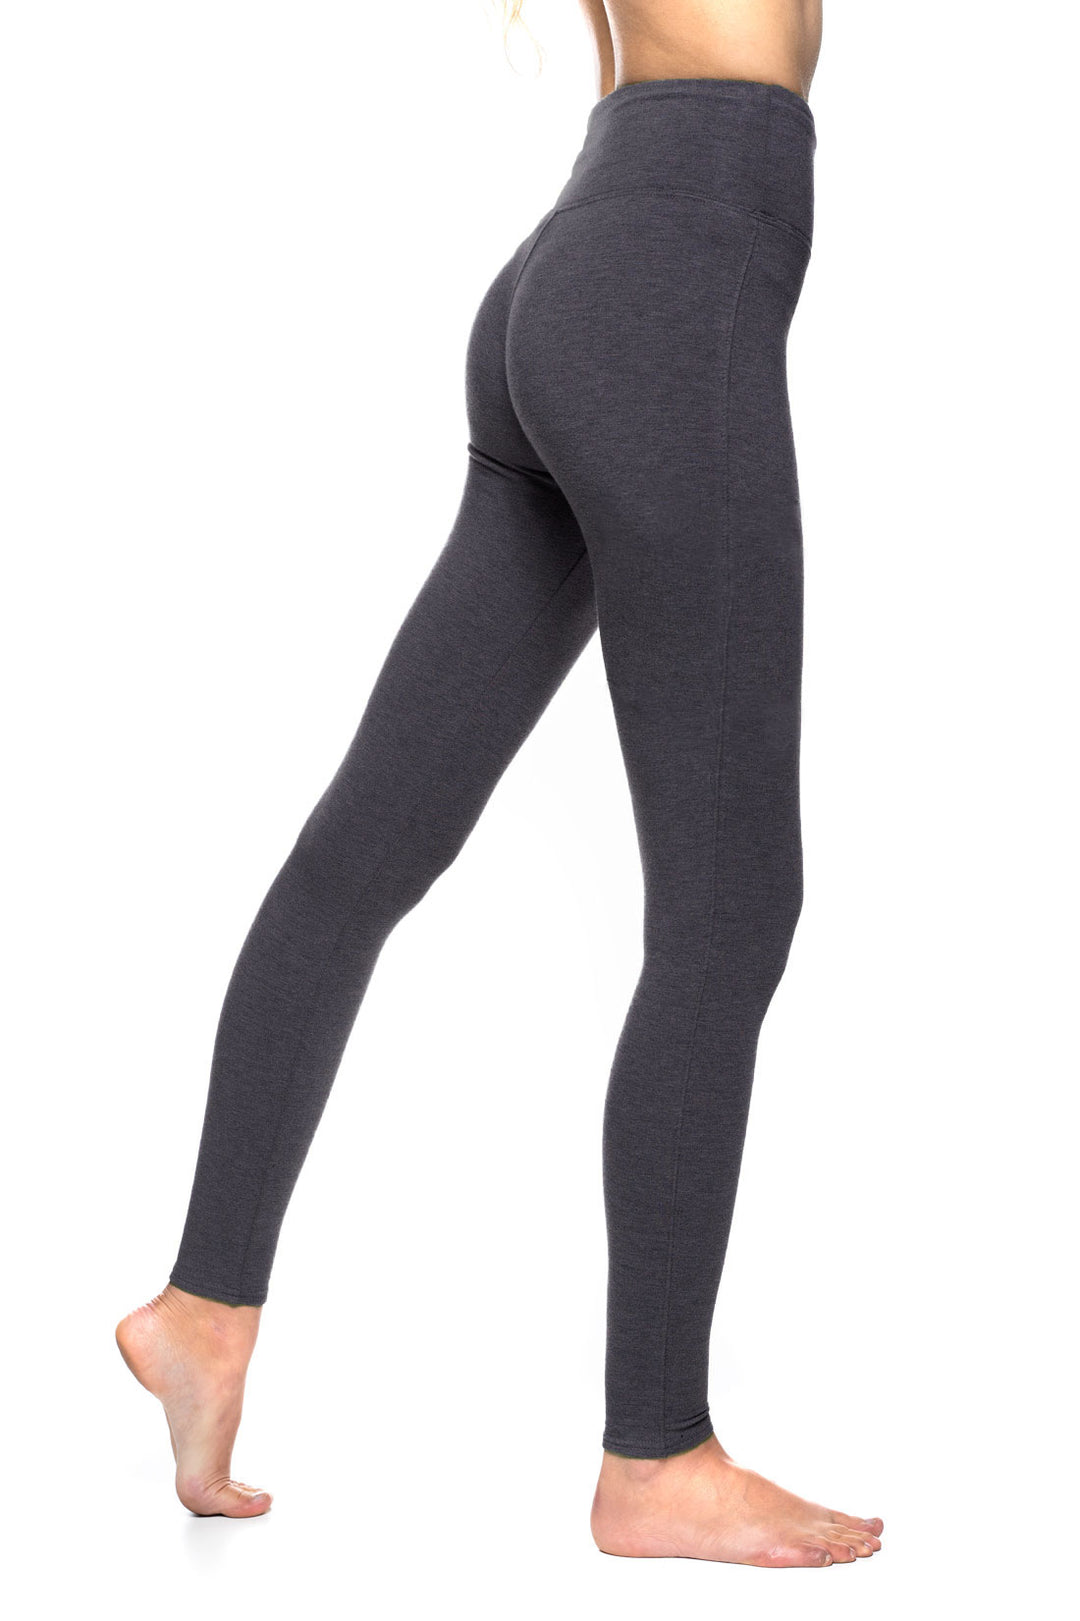 Grey High Waist Gym Yoga Leggings, Skin Fit at Rs 340 in